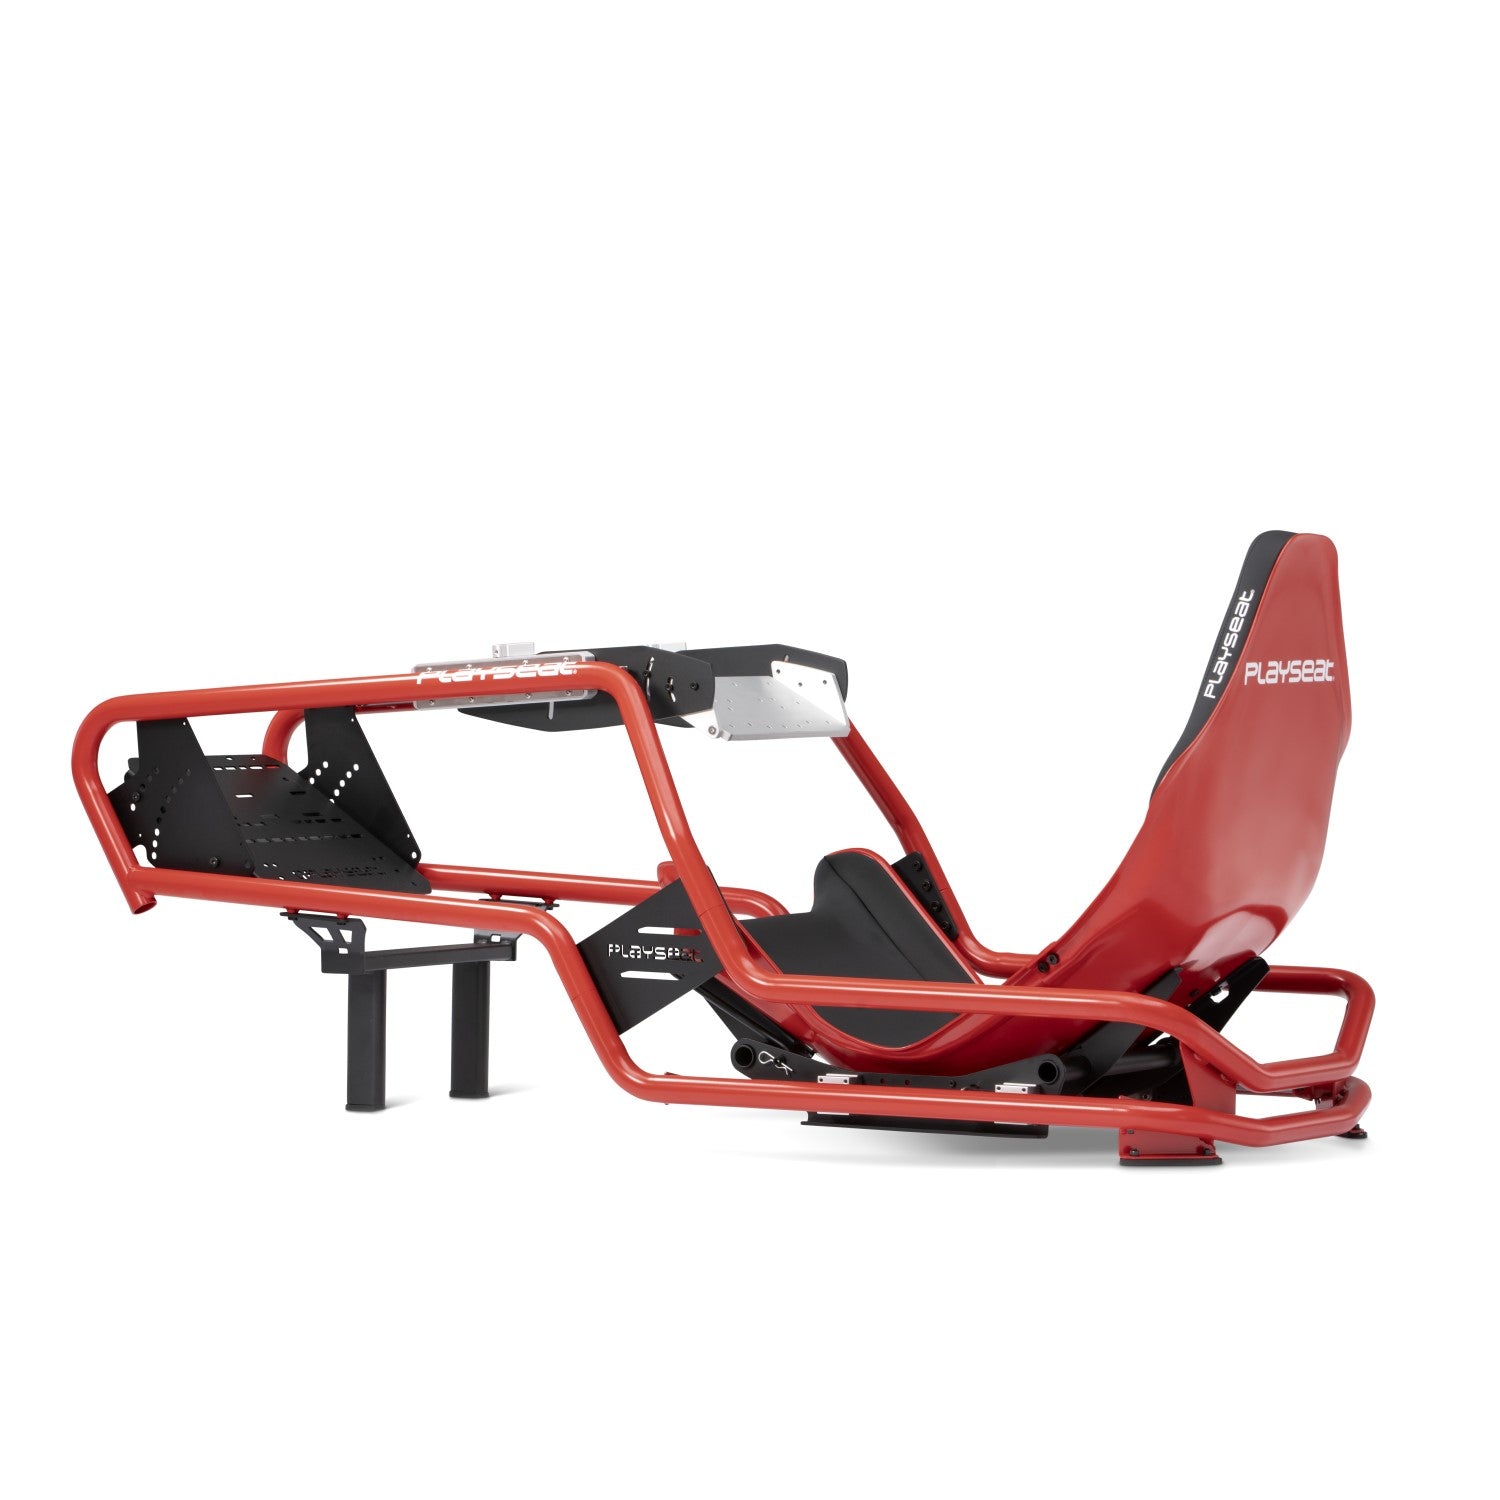 Playseat Racing Sim Rennsimulator Sitzgestell mit Rennsitz